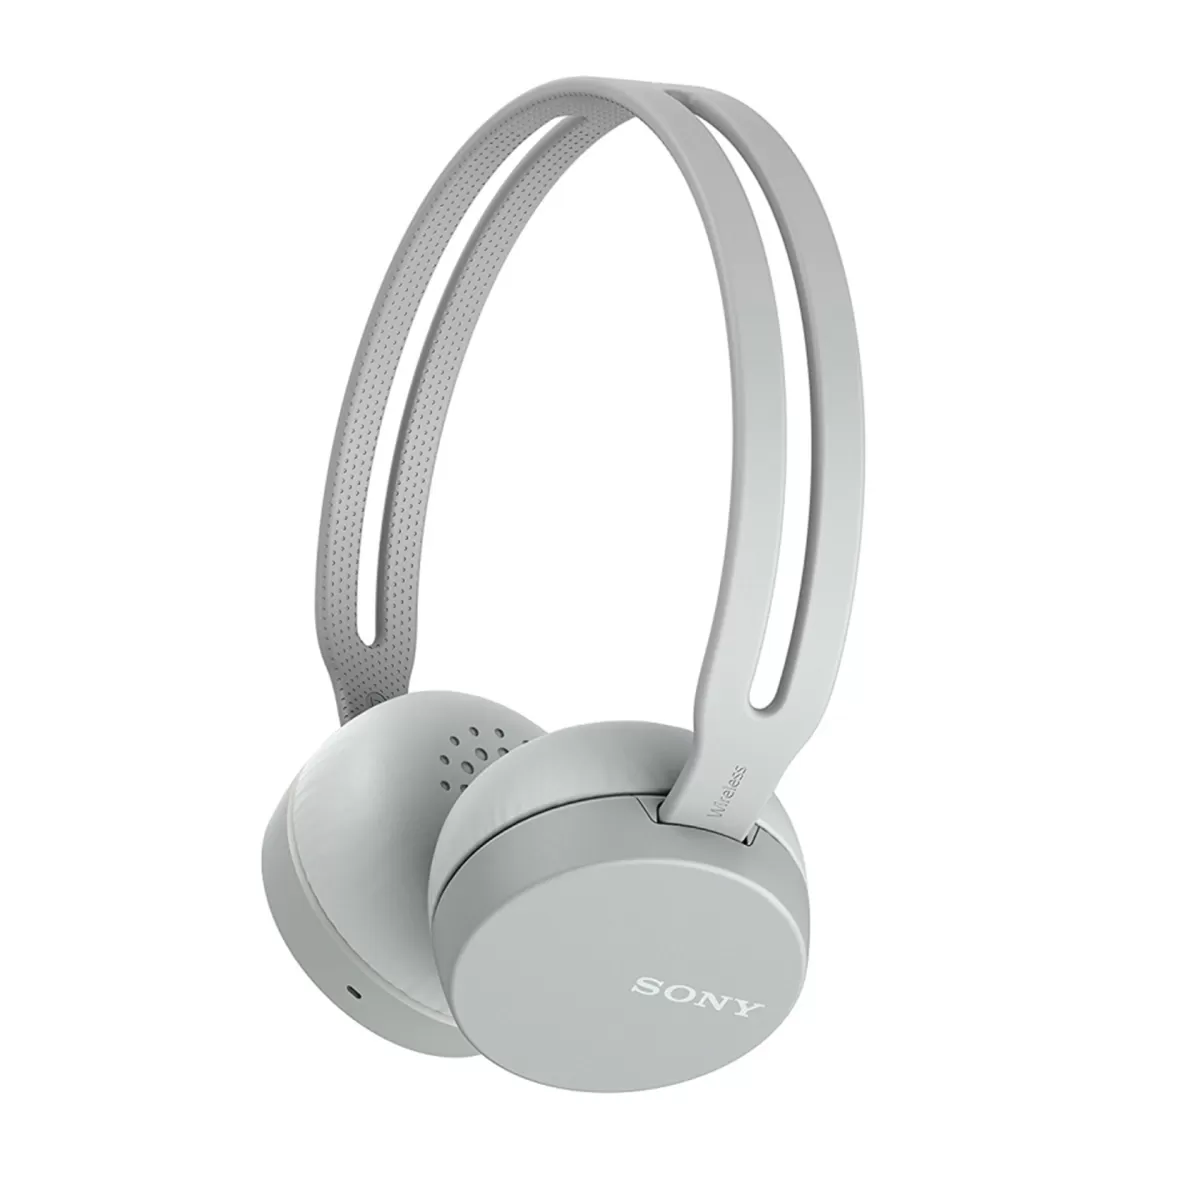 Sony Слушалки WH-CH400, с Bluetooth, сиви